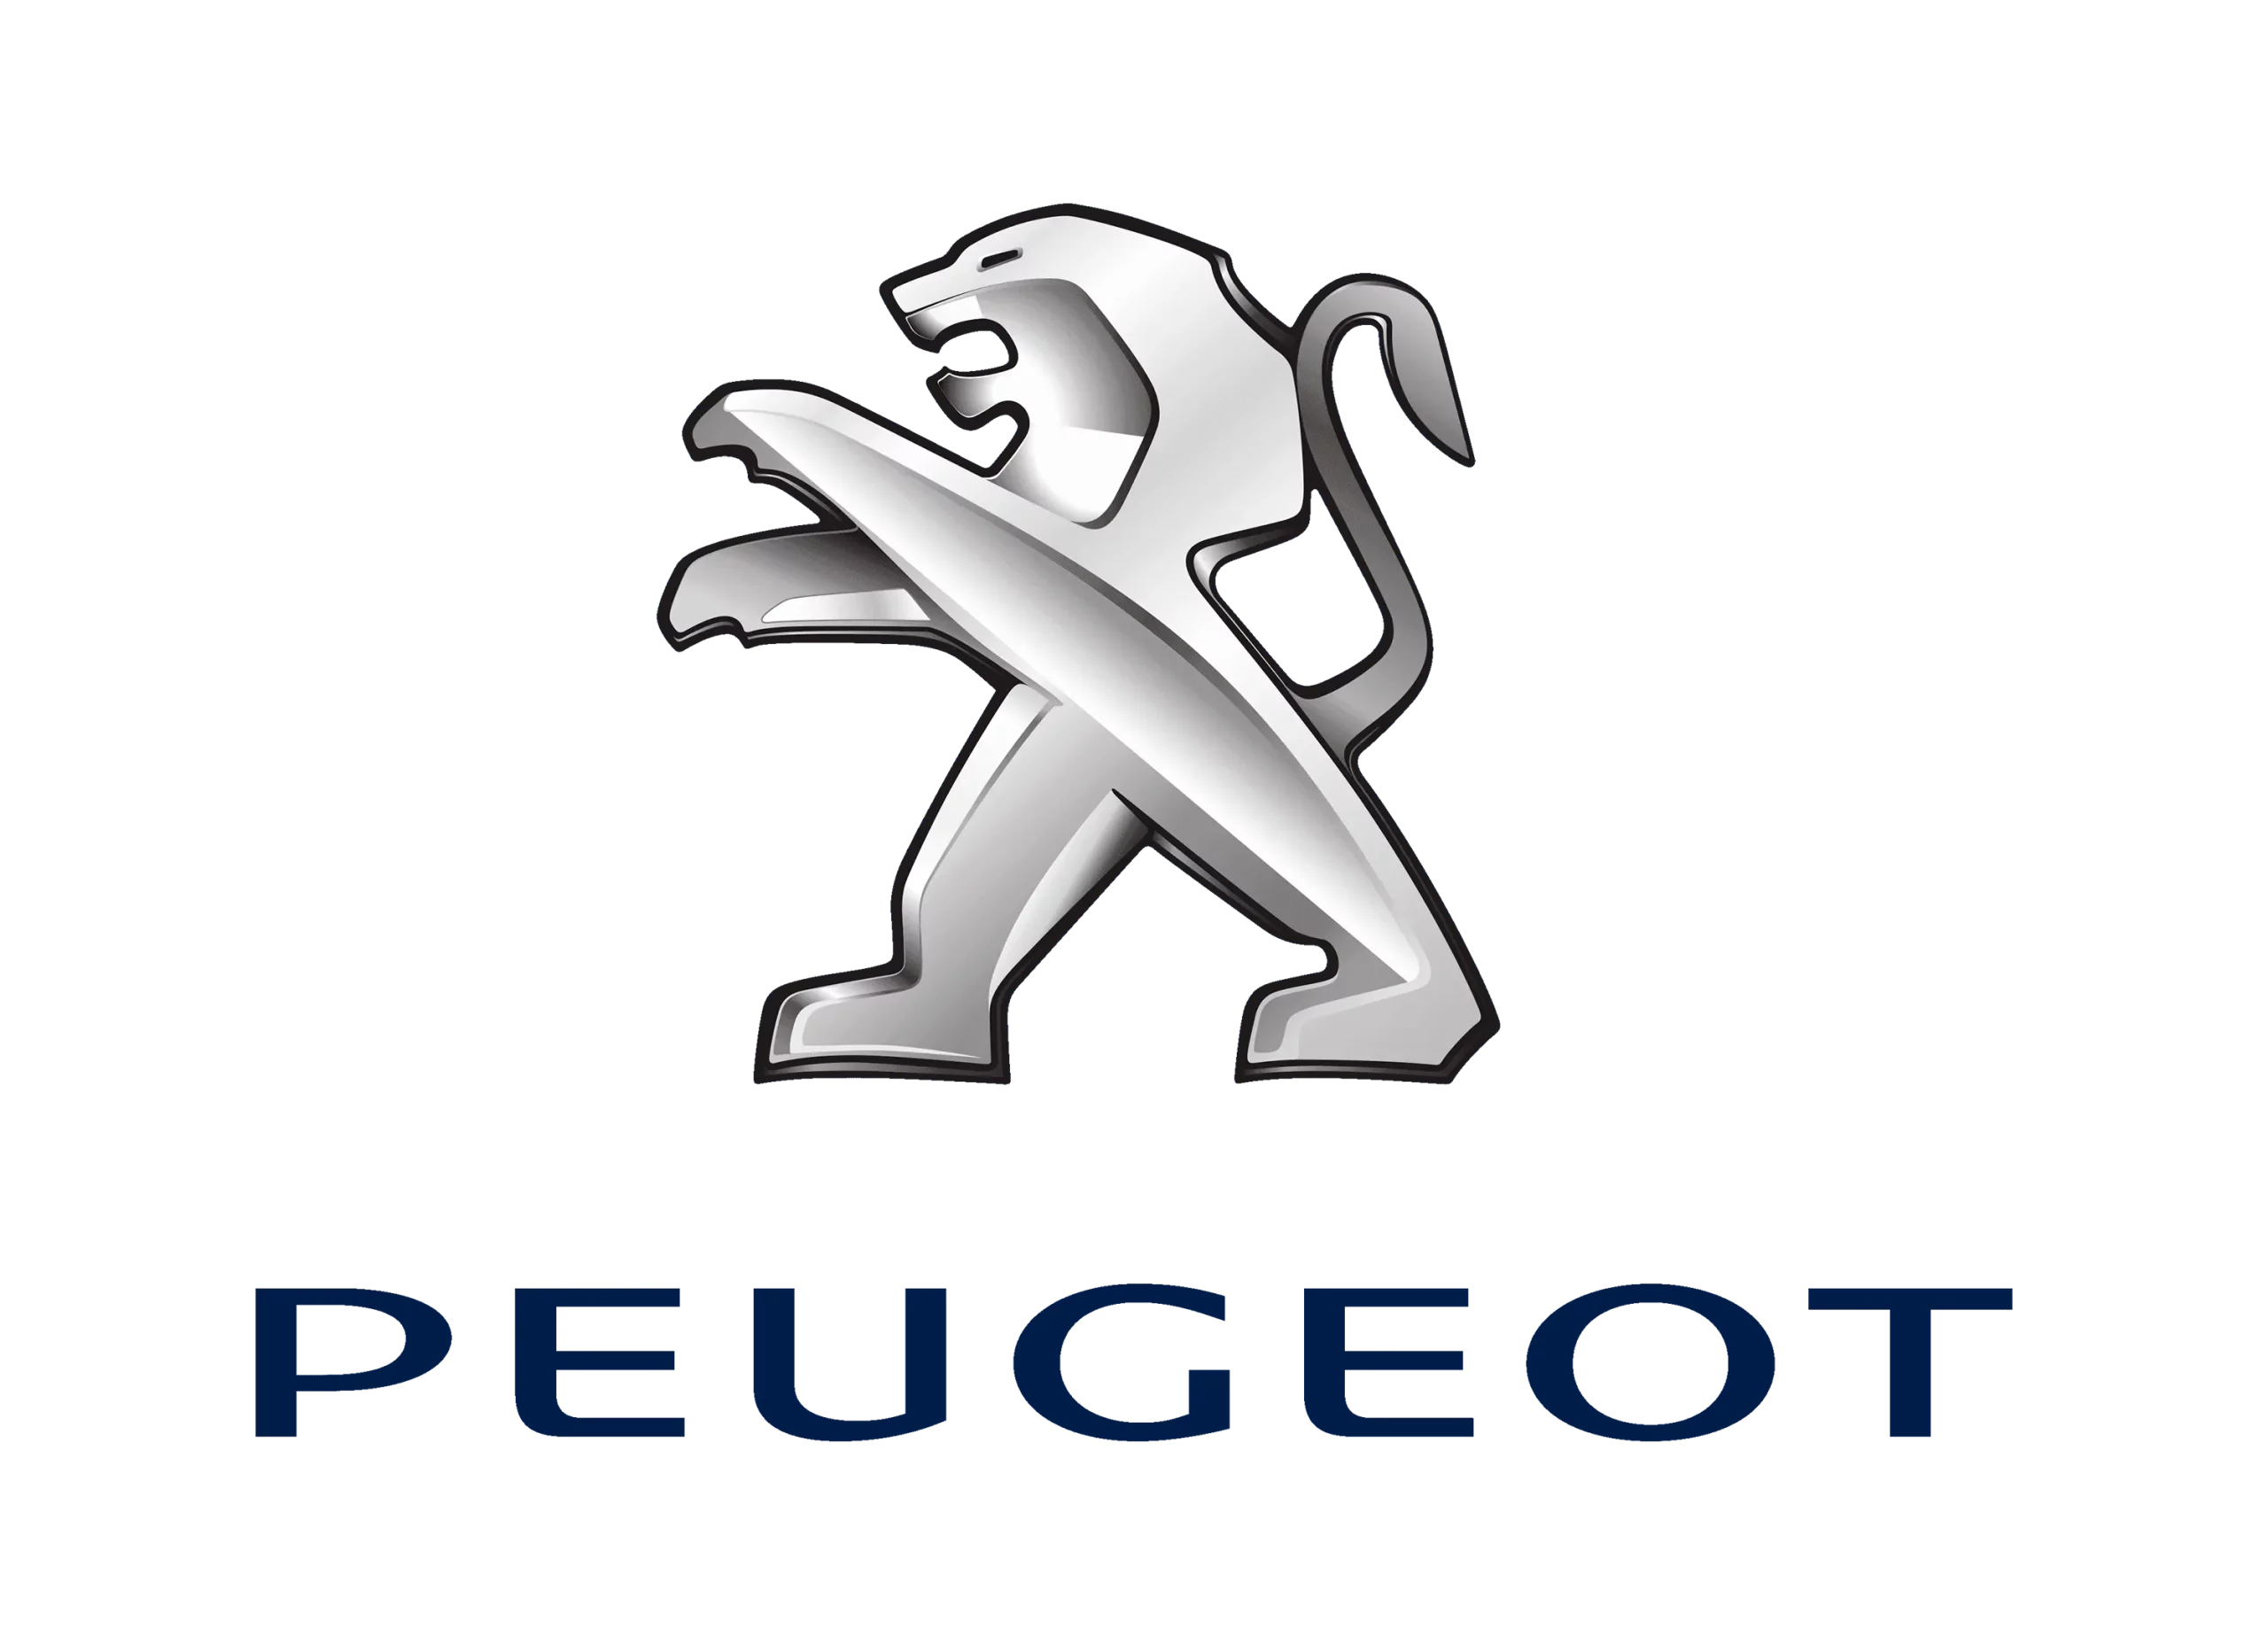 Peugeot logo 2010-2021